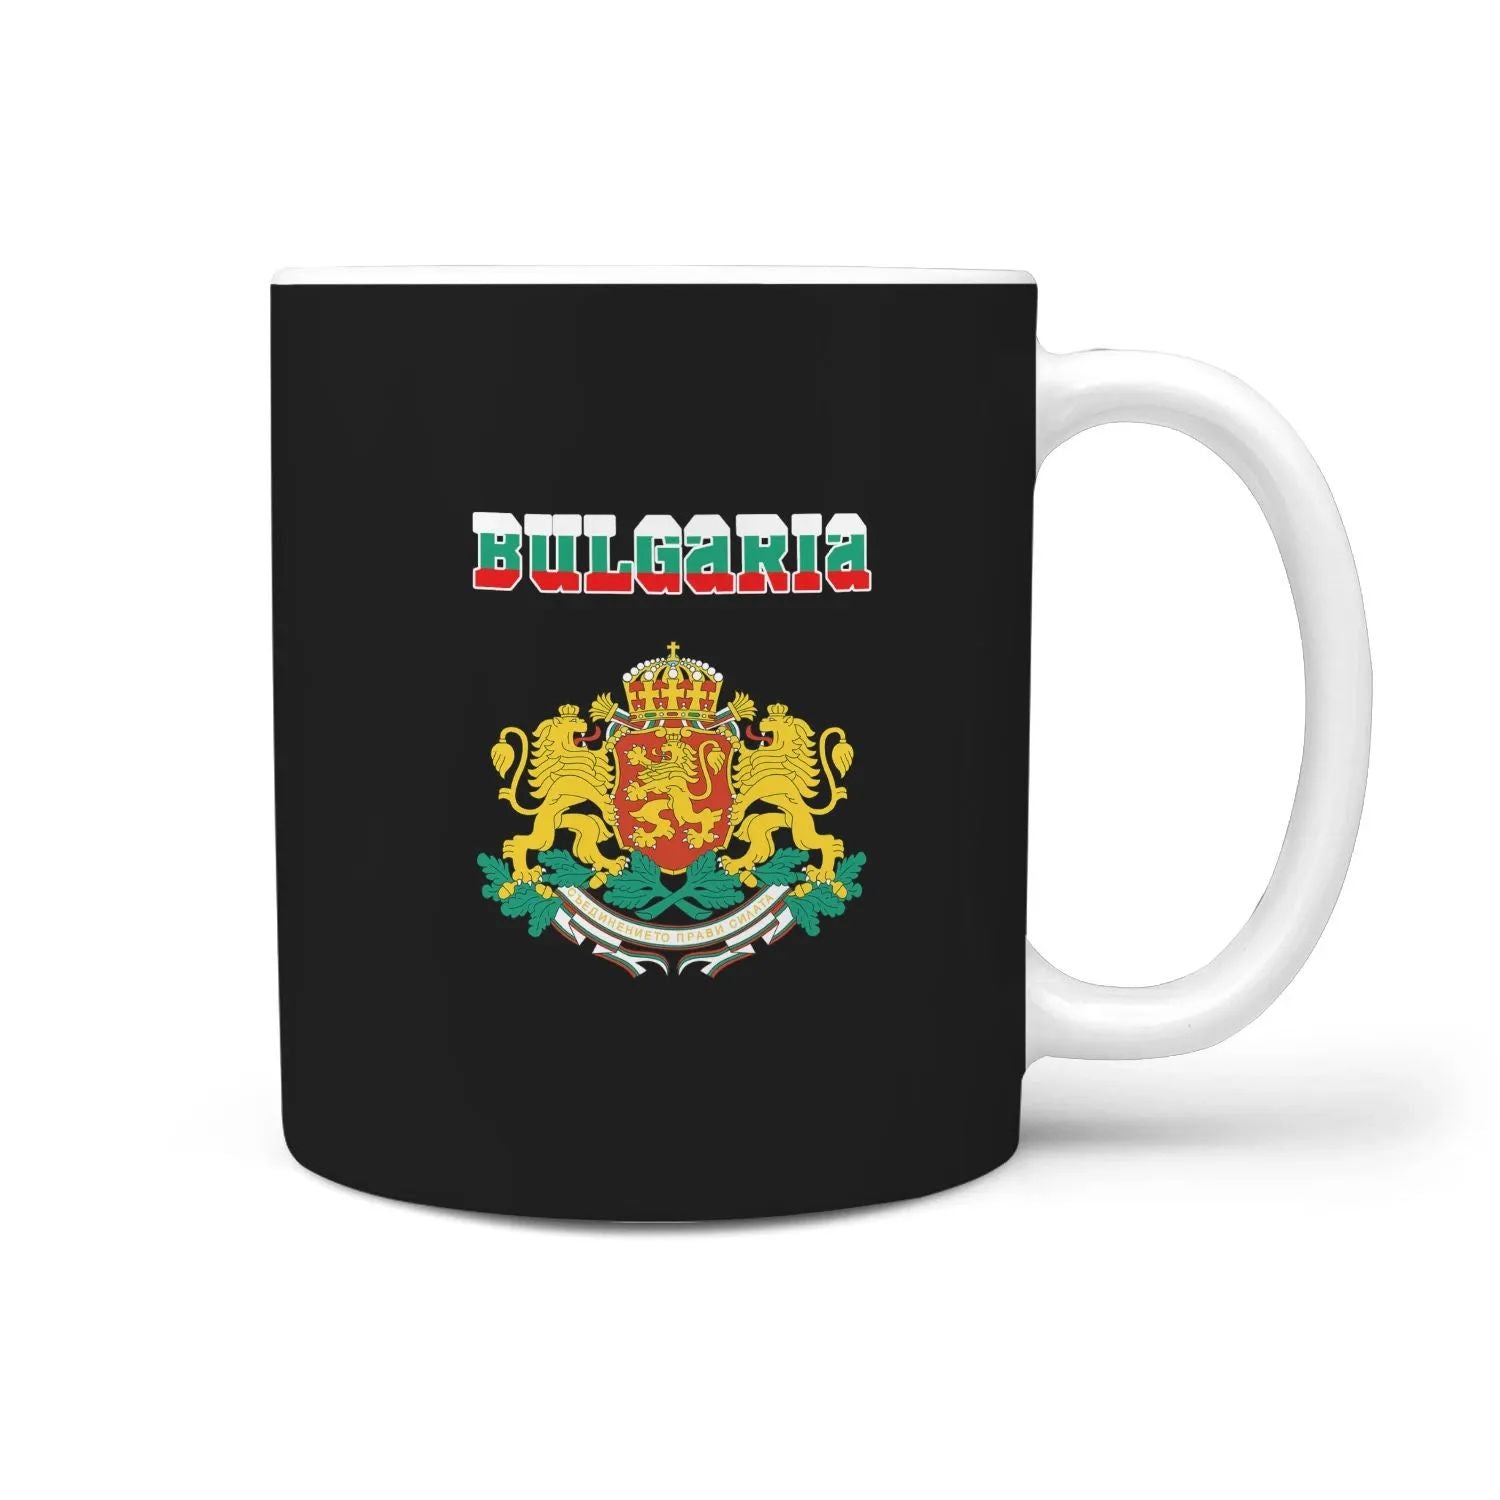 bulgaria-mug-coat-of-arm-name